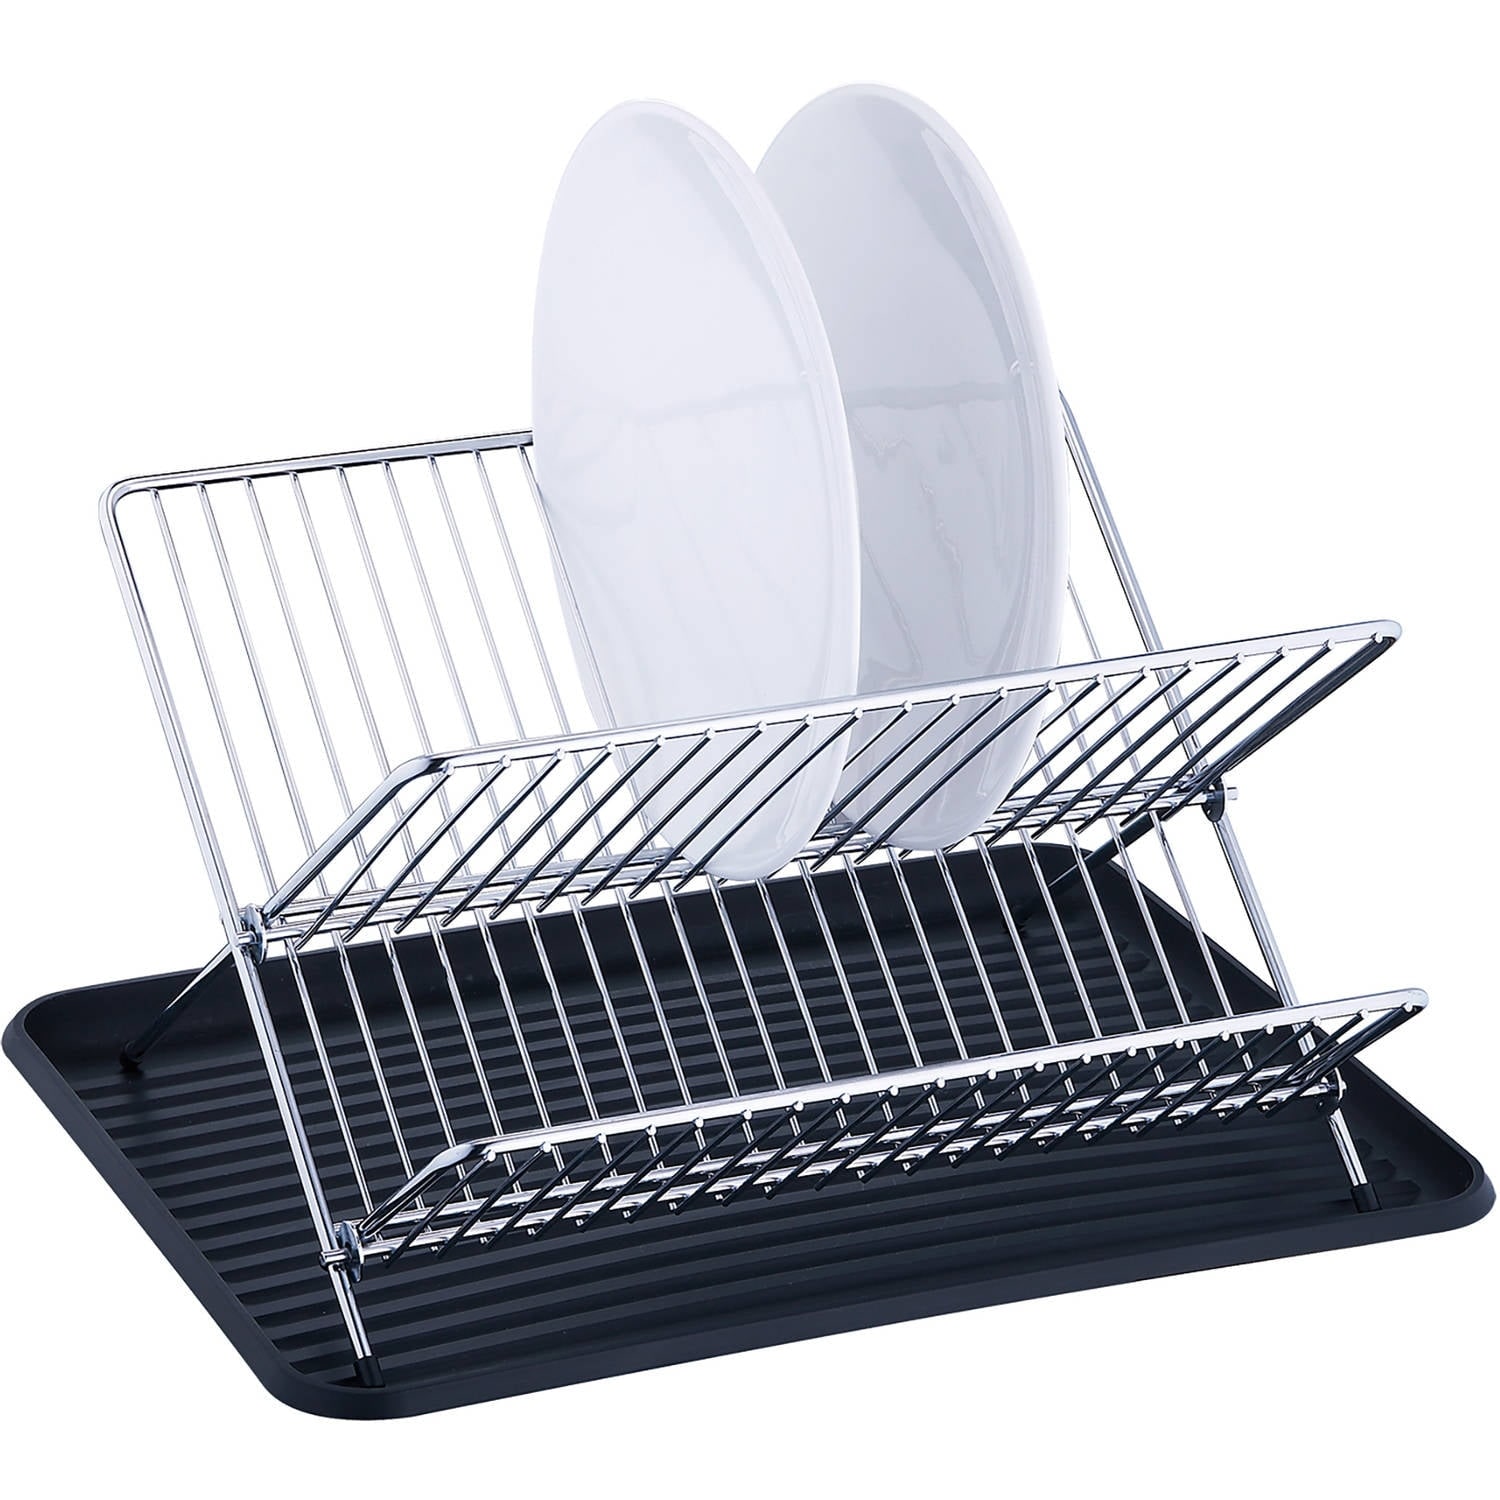 Stainless Steel Dish Rack - Folding